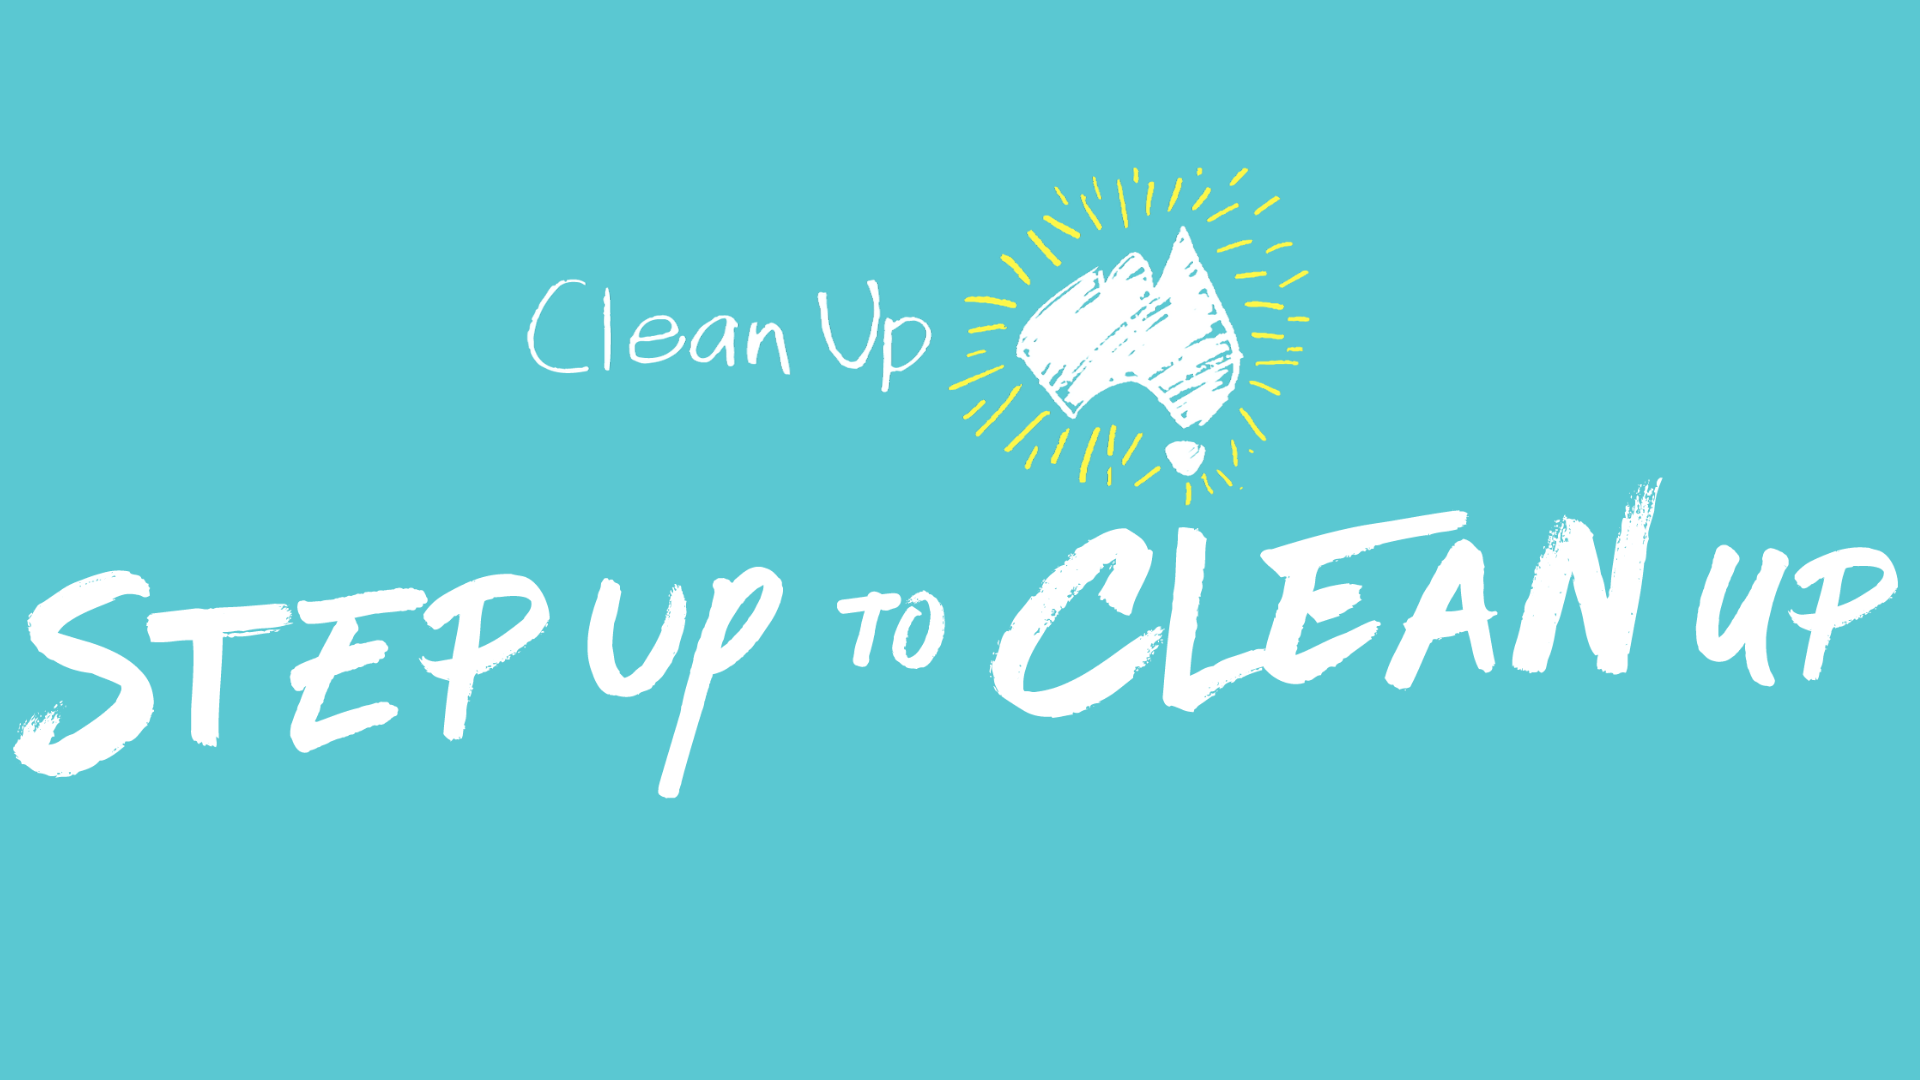 Image: Clean Up Australia